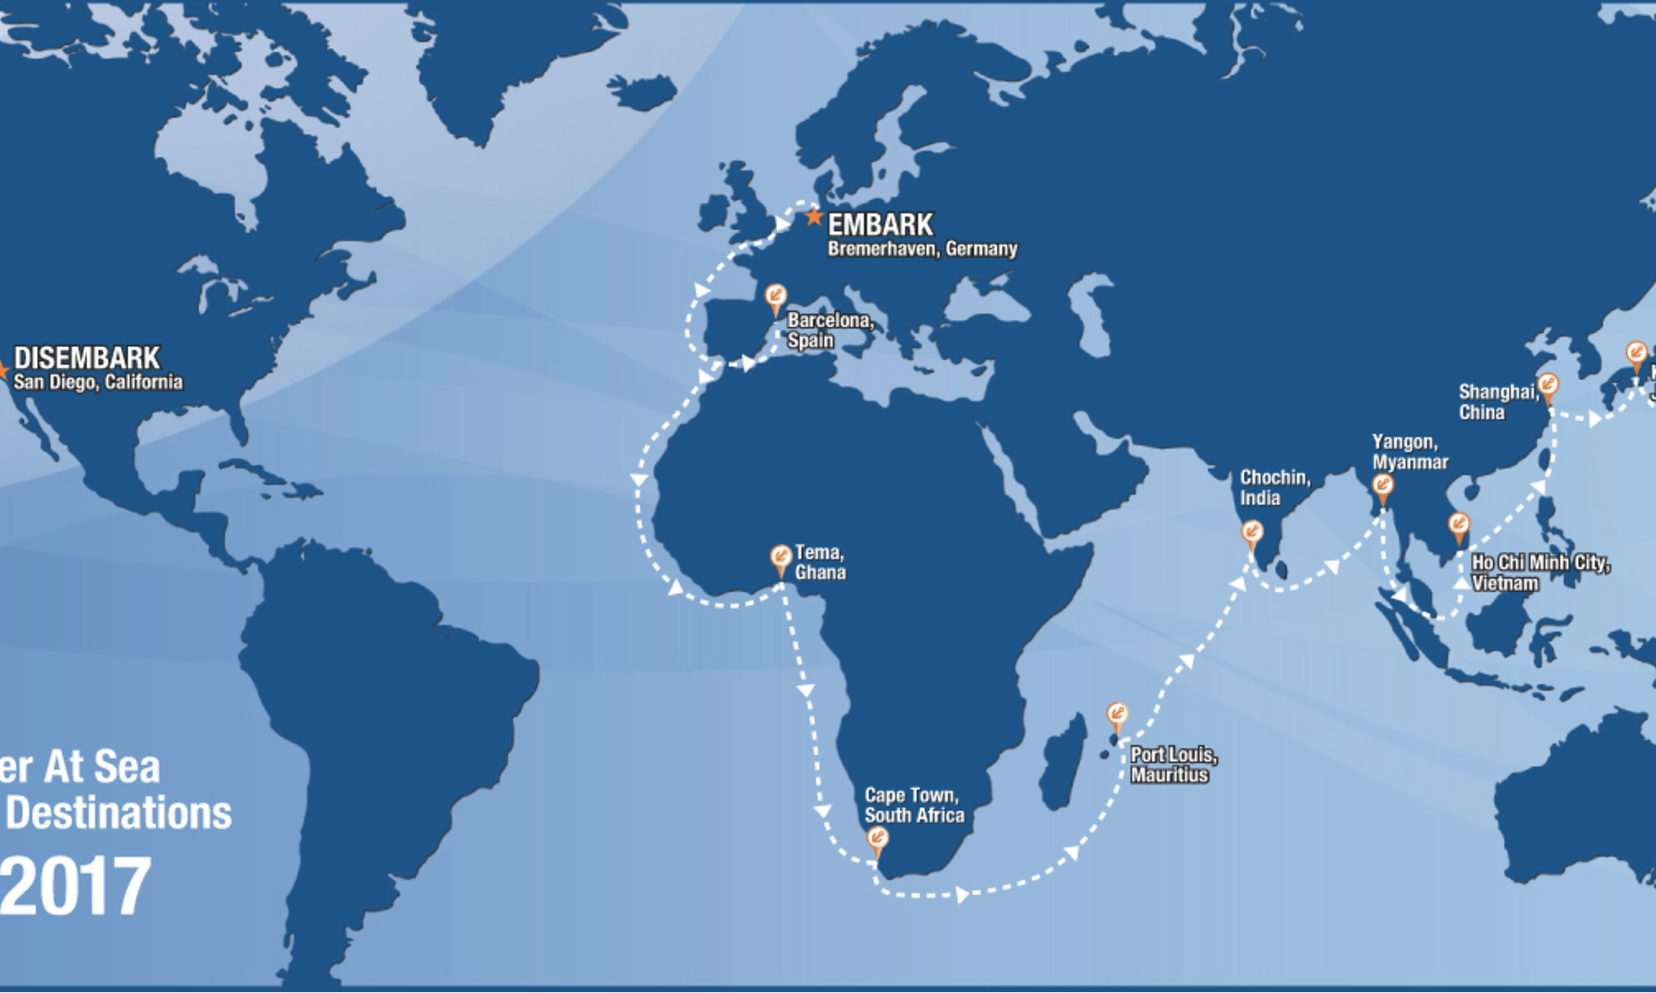 A voyage around the world : 11 countries, 106 days